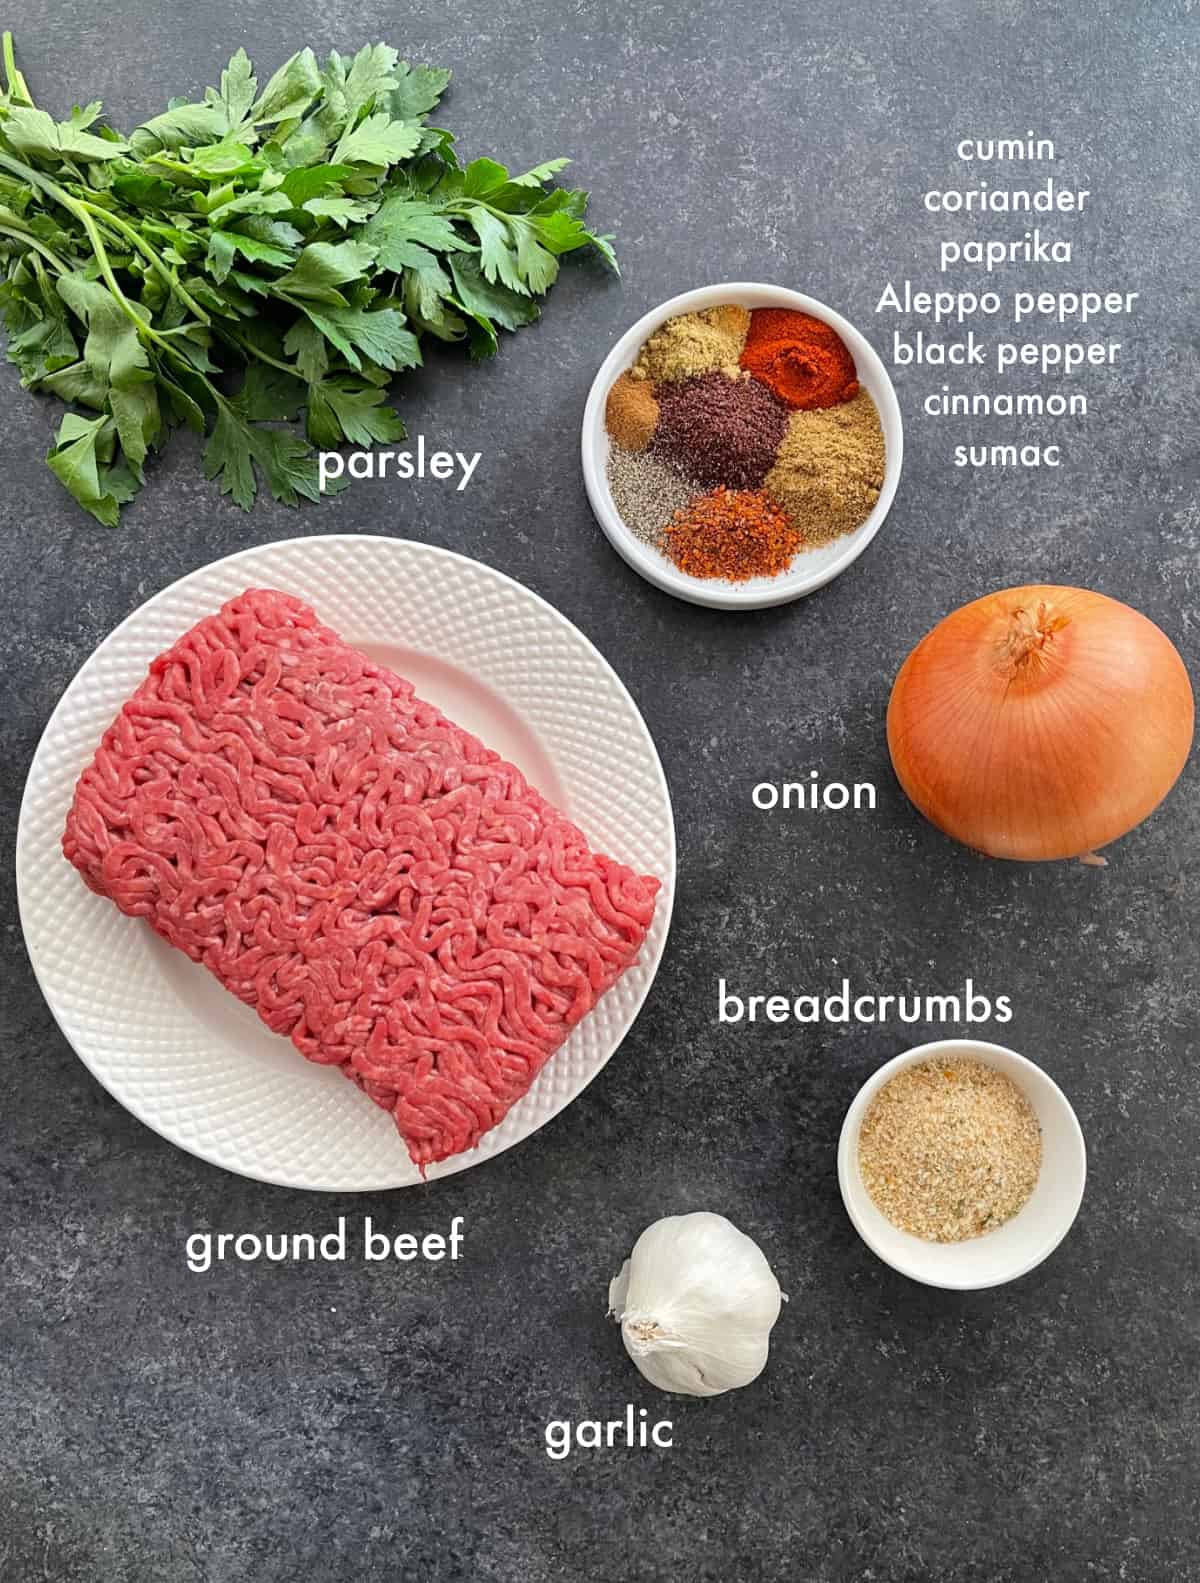 To make kofta kebab you need ground beef, breadcrumbs, parsley, onion, garlic and spices. 